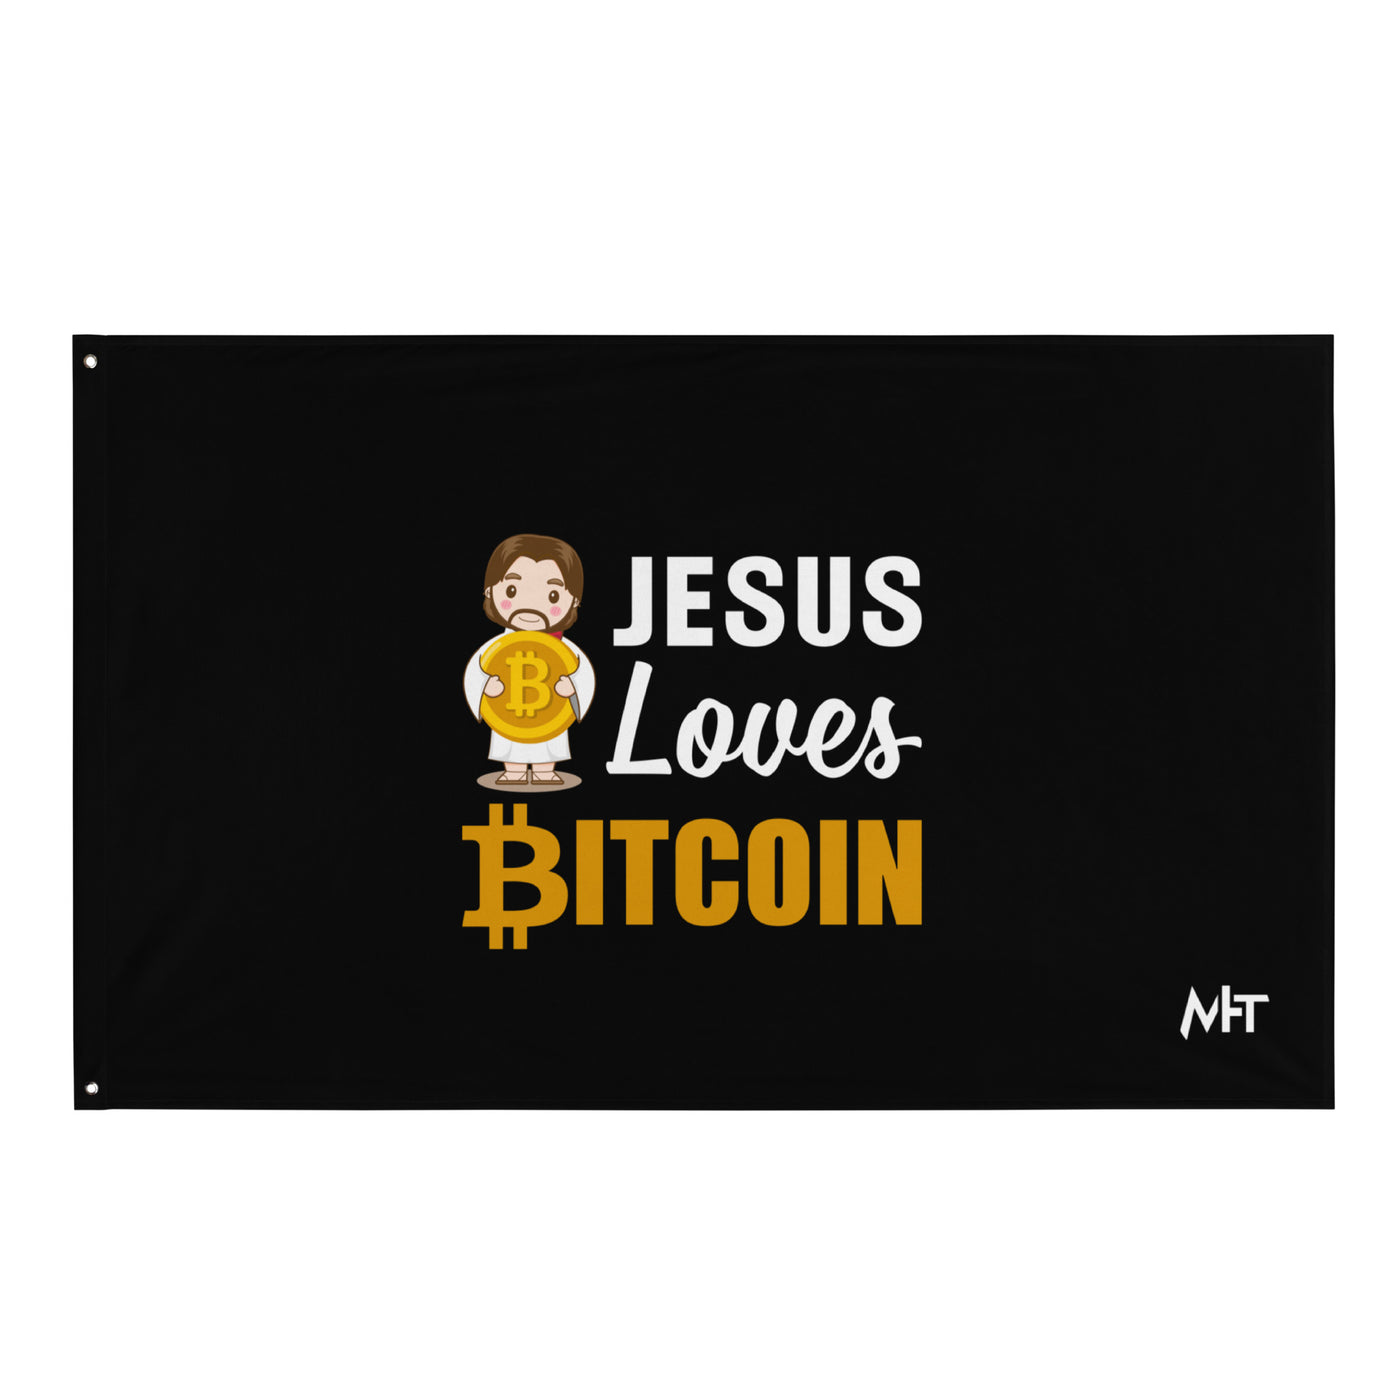 Jesus loves Bitcoin - Flag